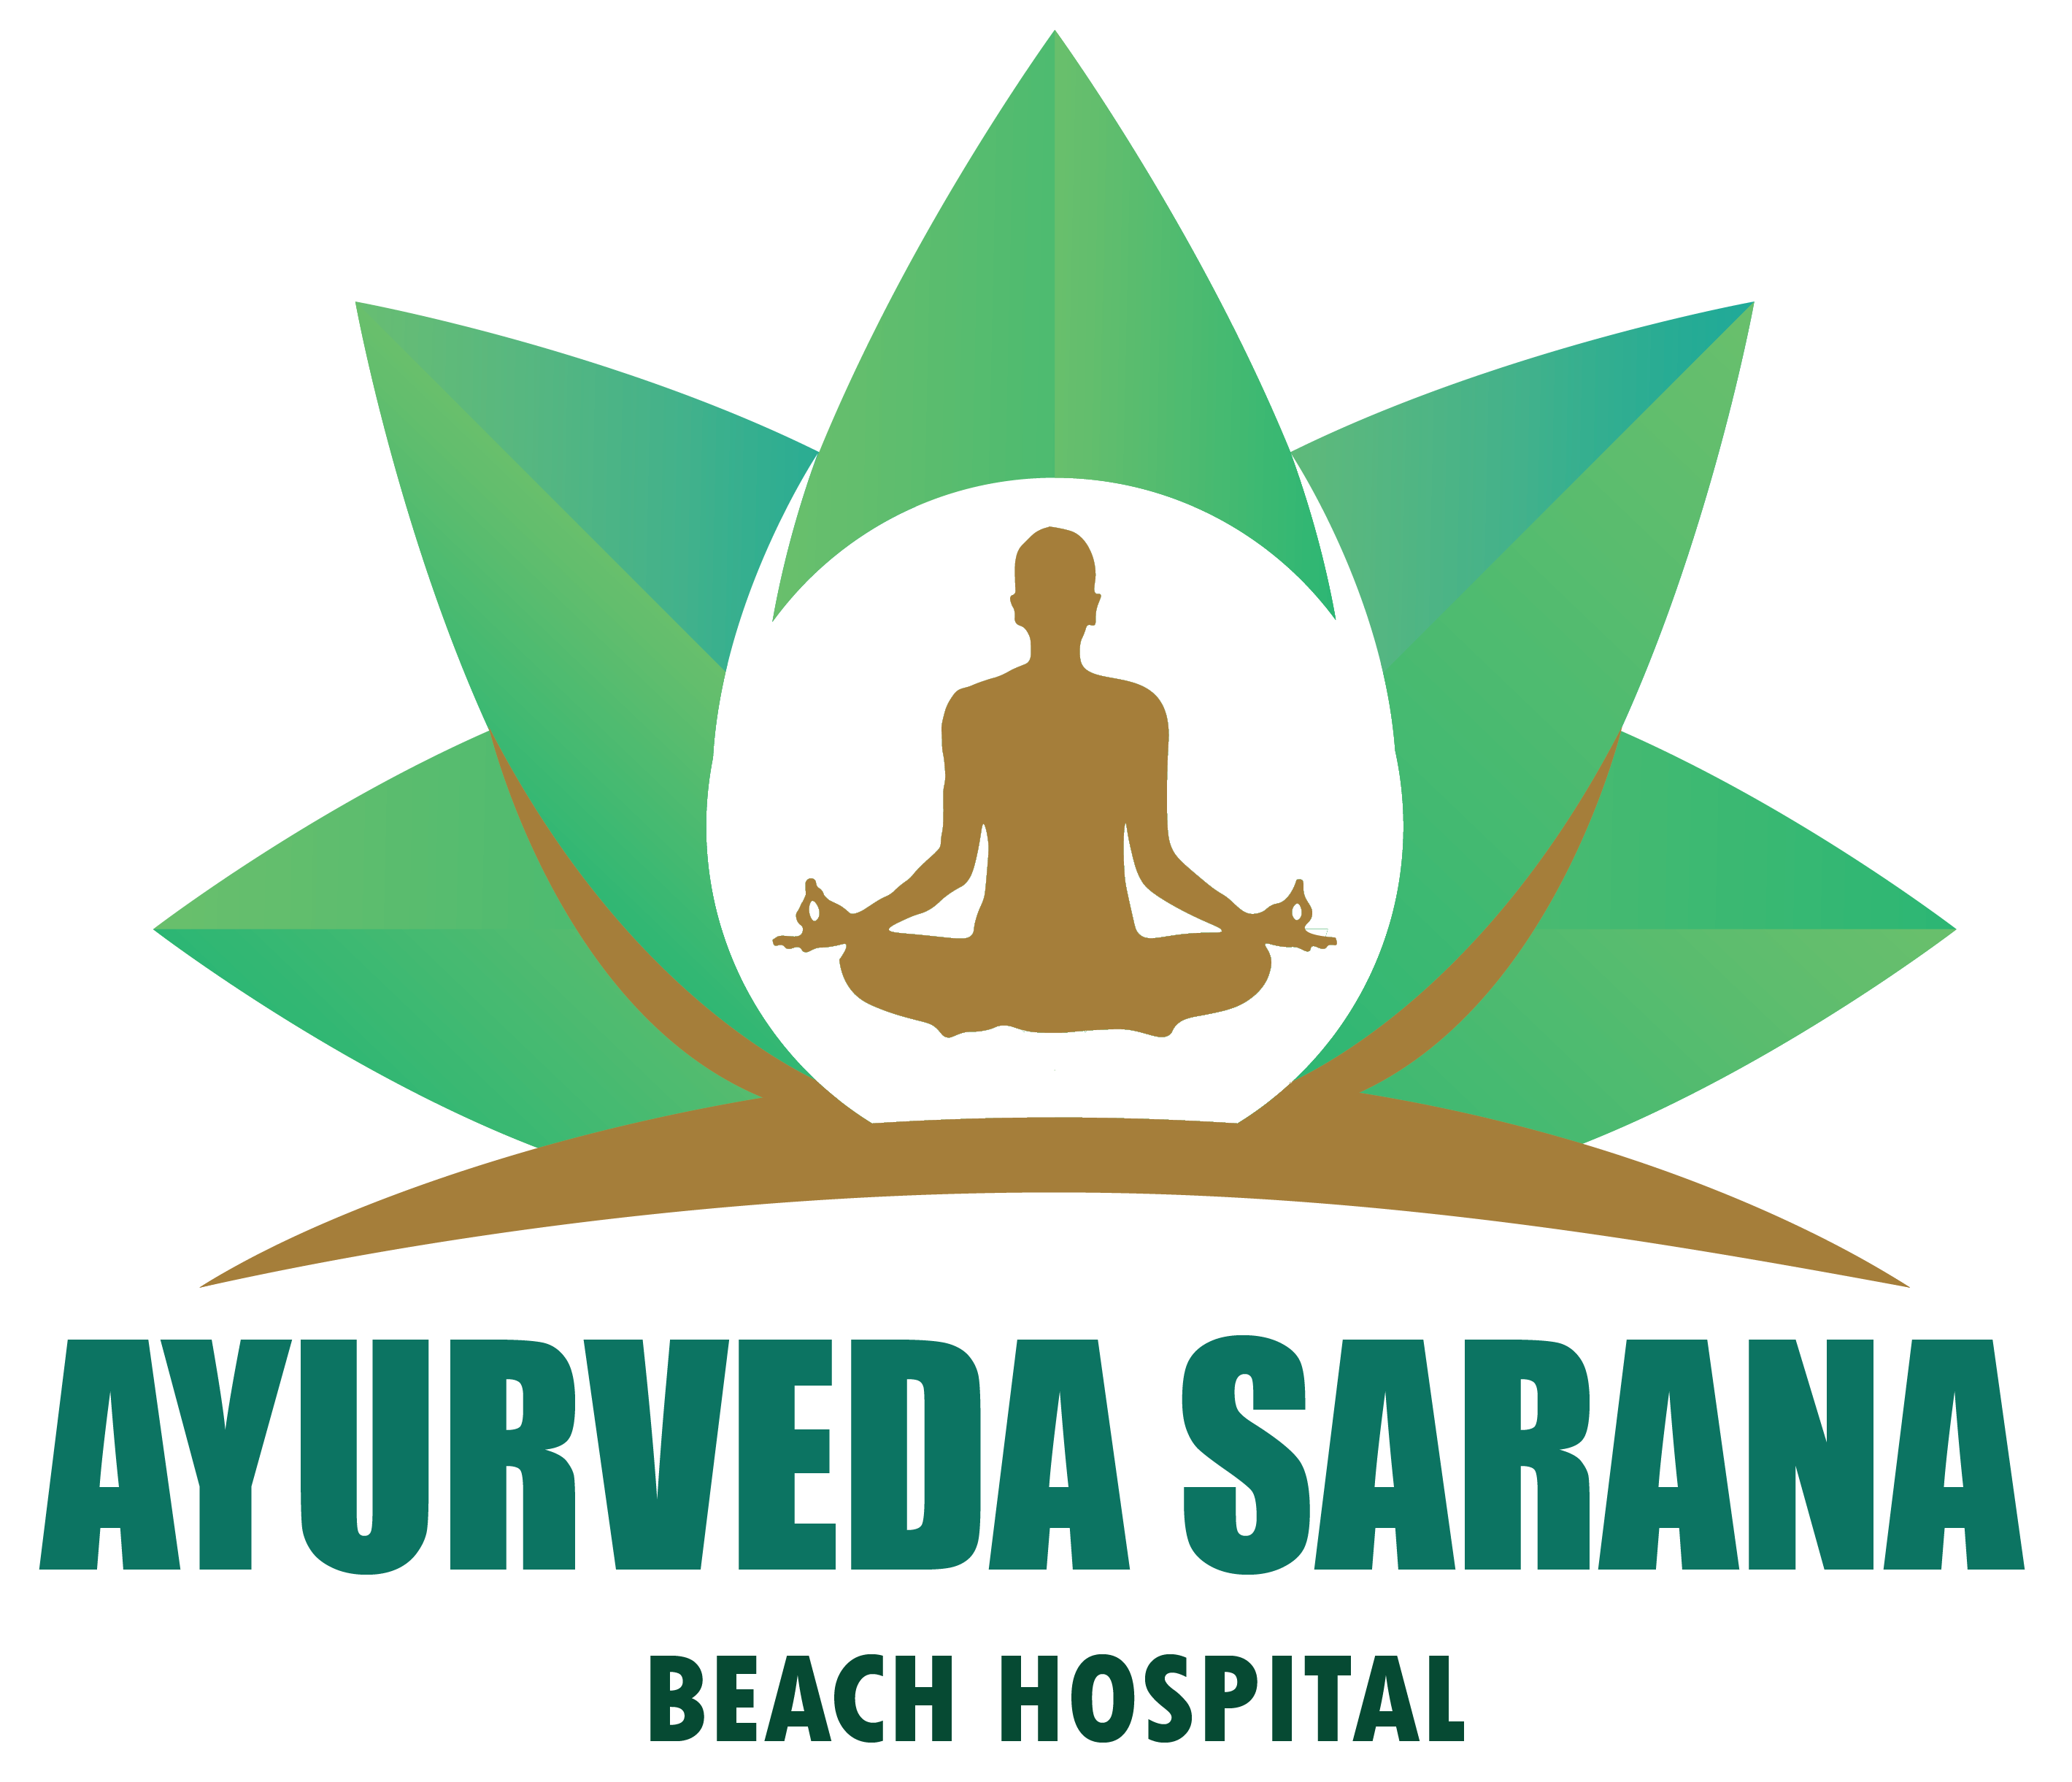 Ayurveda logo with lotus symbol Royalty Free Vector Image